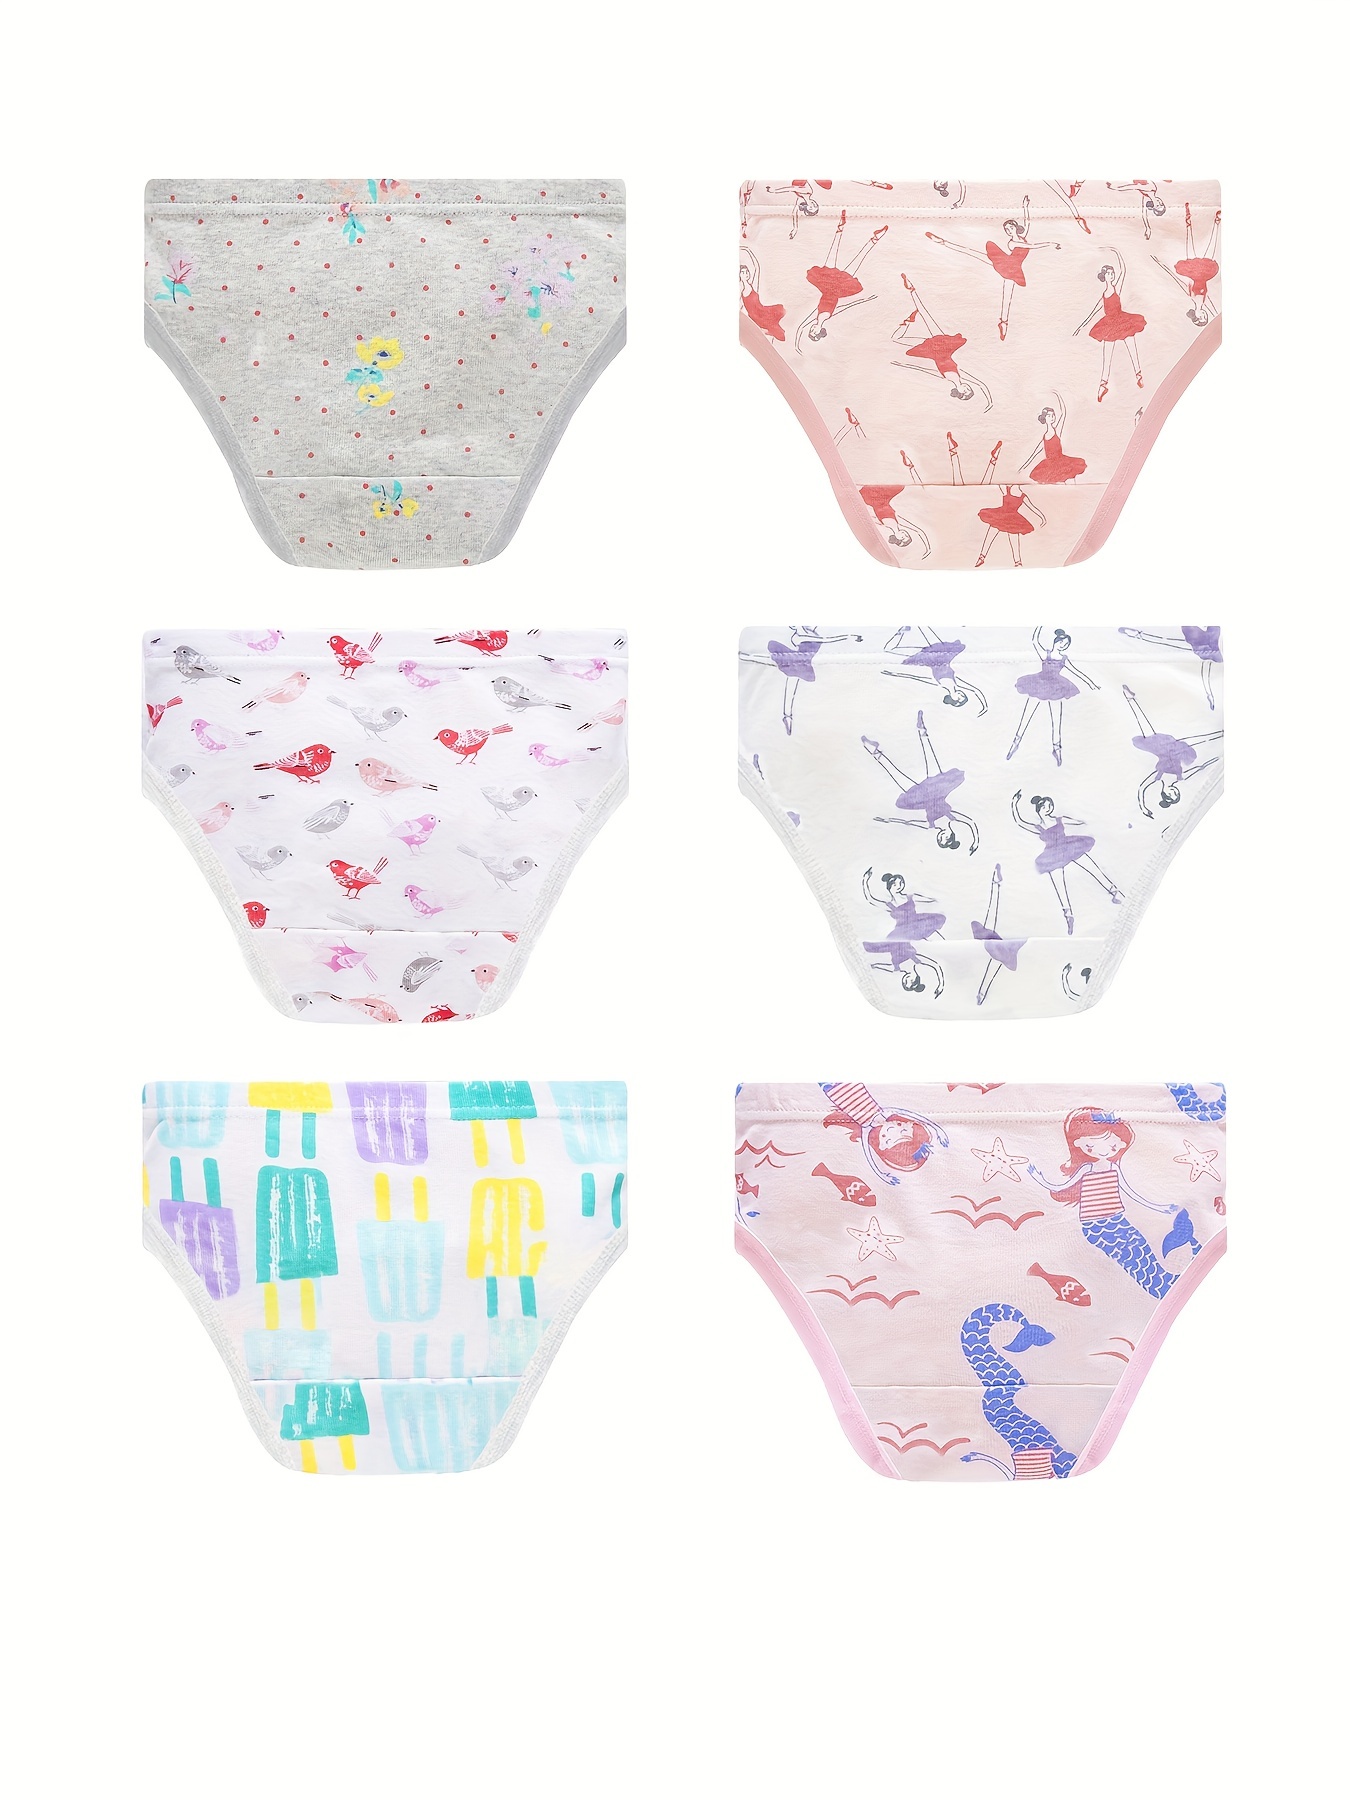 Baby 5 Pack Panties Soft Knickers Cotton Underwear Little Girls